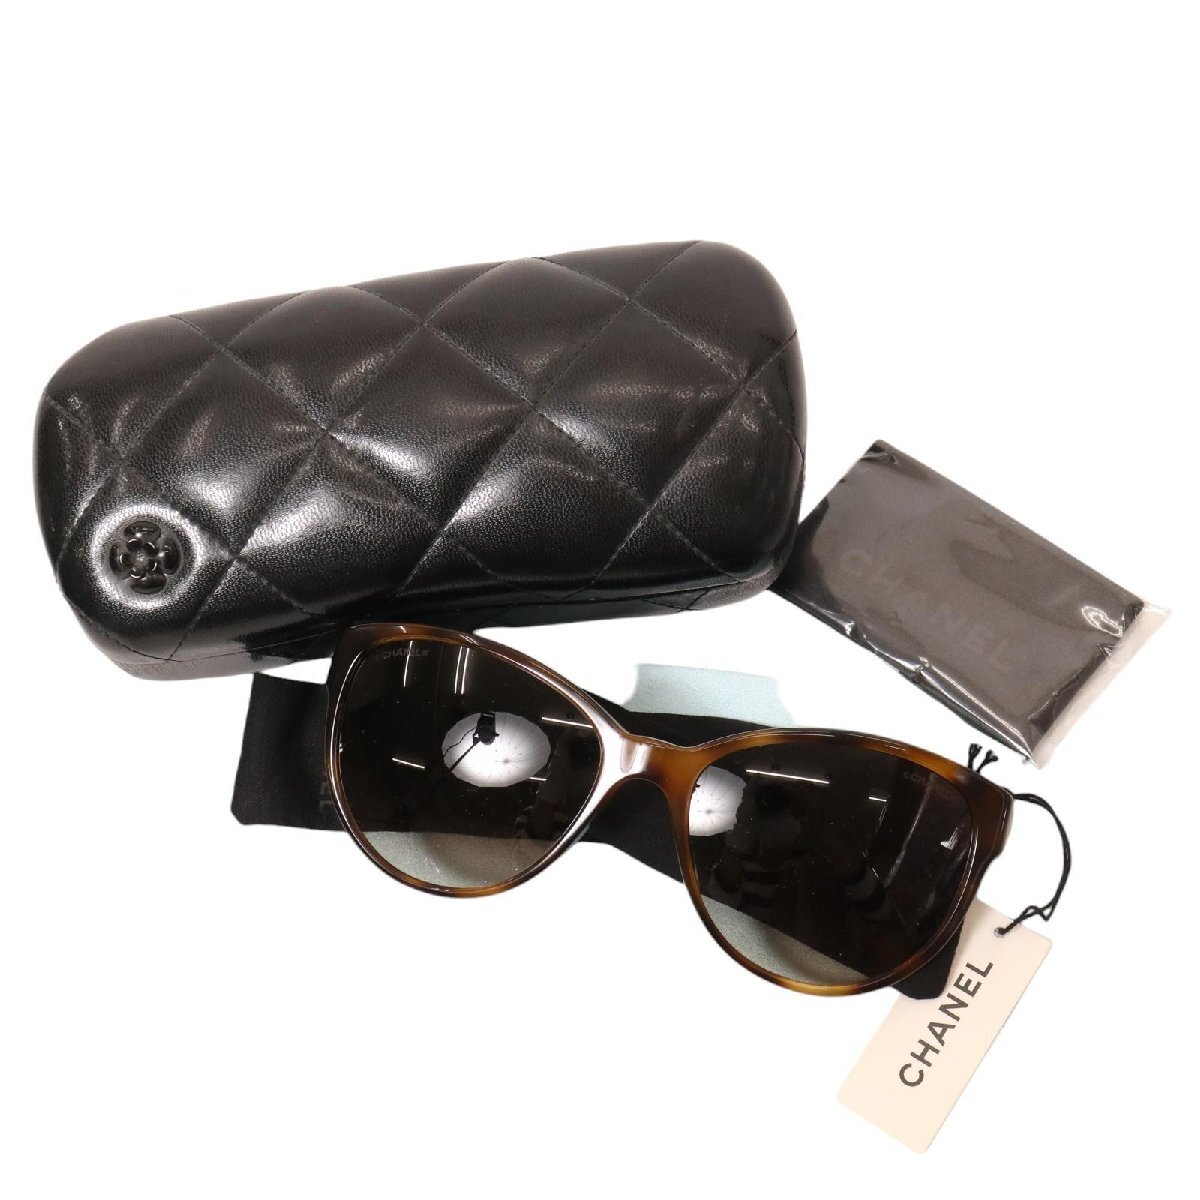 CHANEL Chanel sunglasses box attaching 